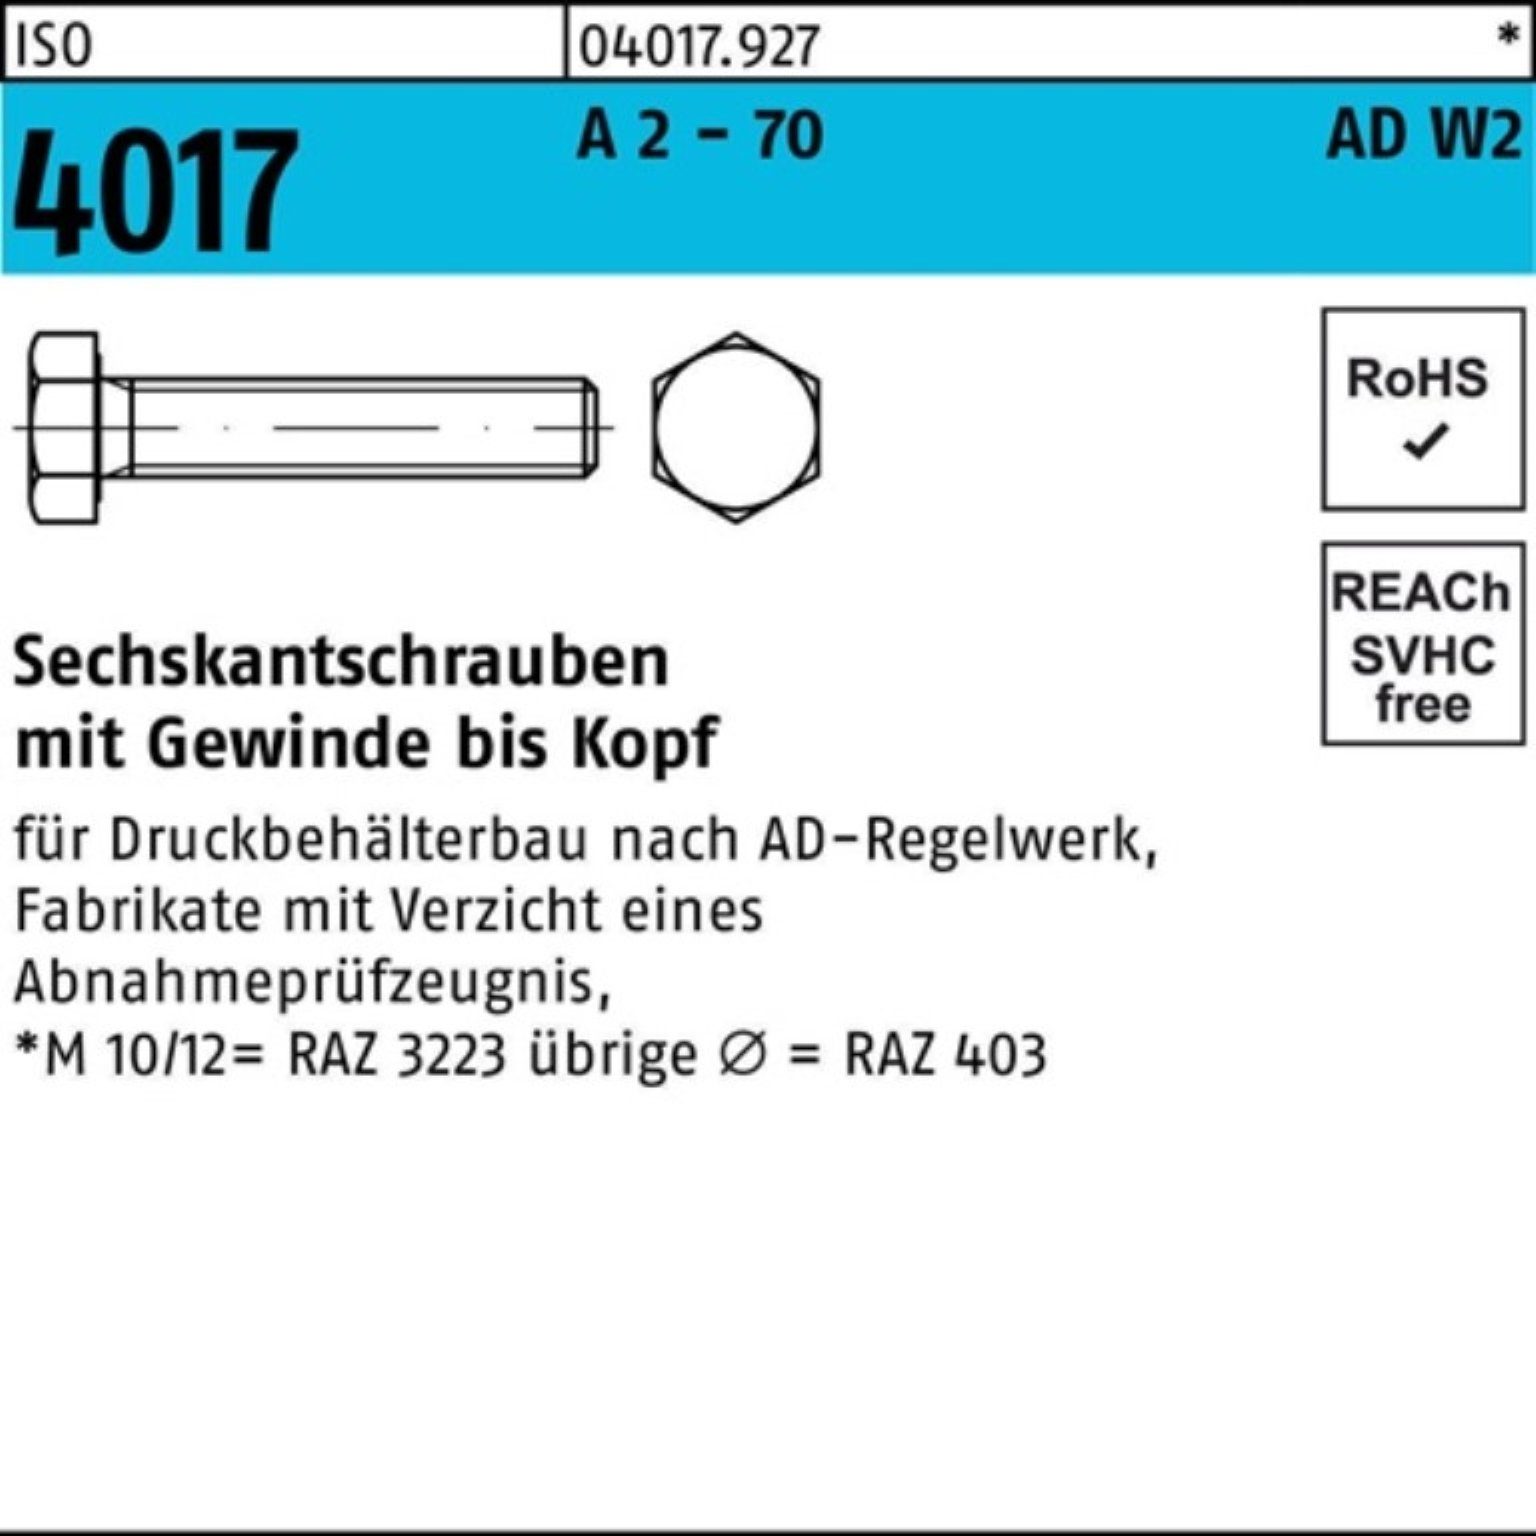 Bufab Pack A AD-W2 - 70 VG St 2 25 4017 Sechskantschraube 40 M20x ISO Sechskantschraube 100er